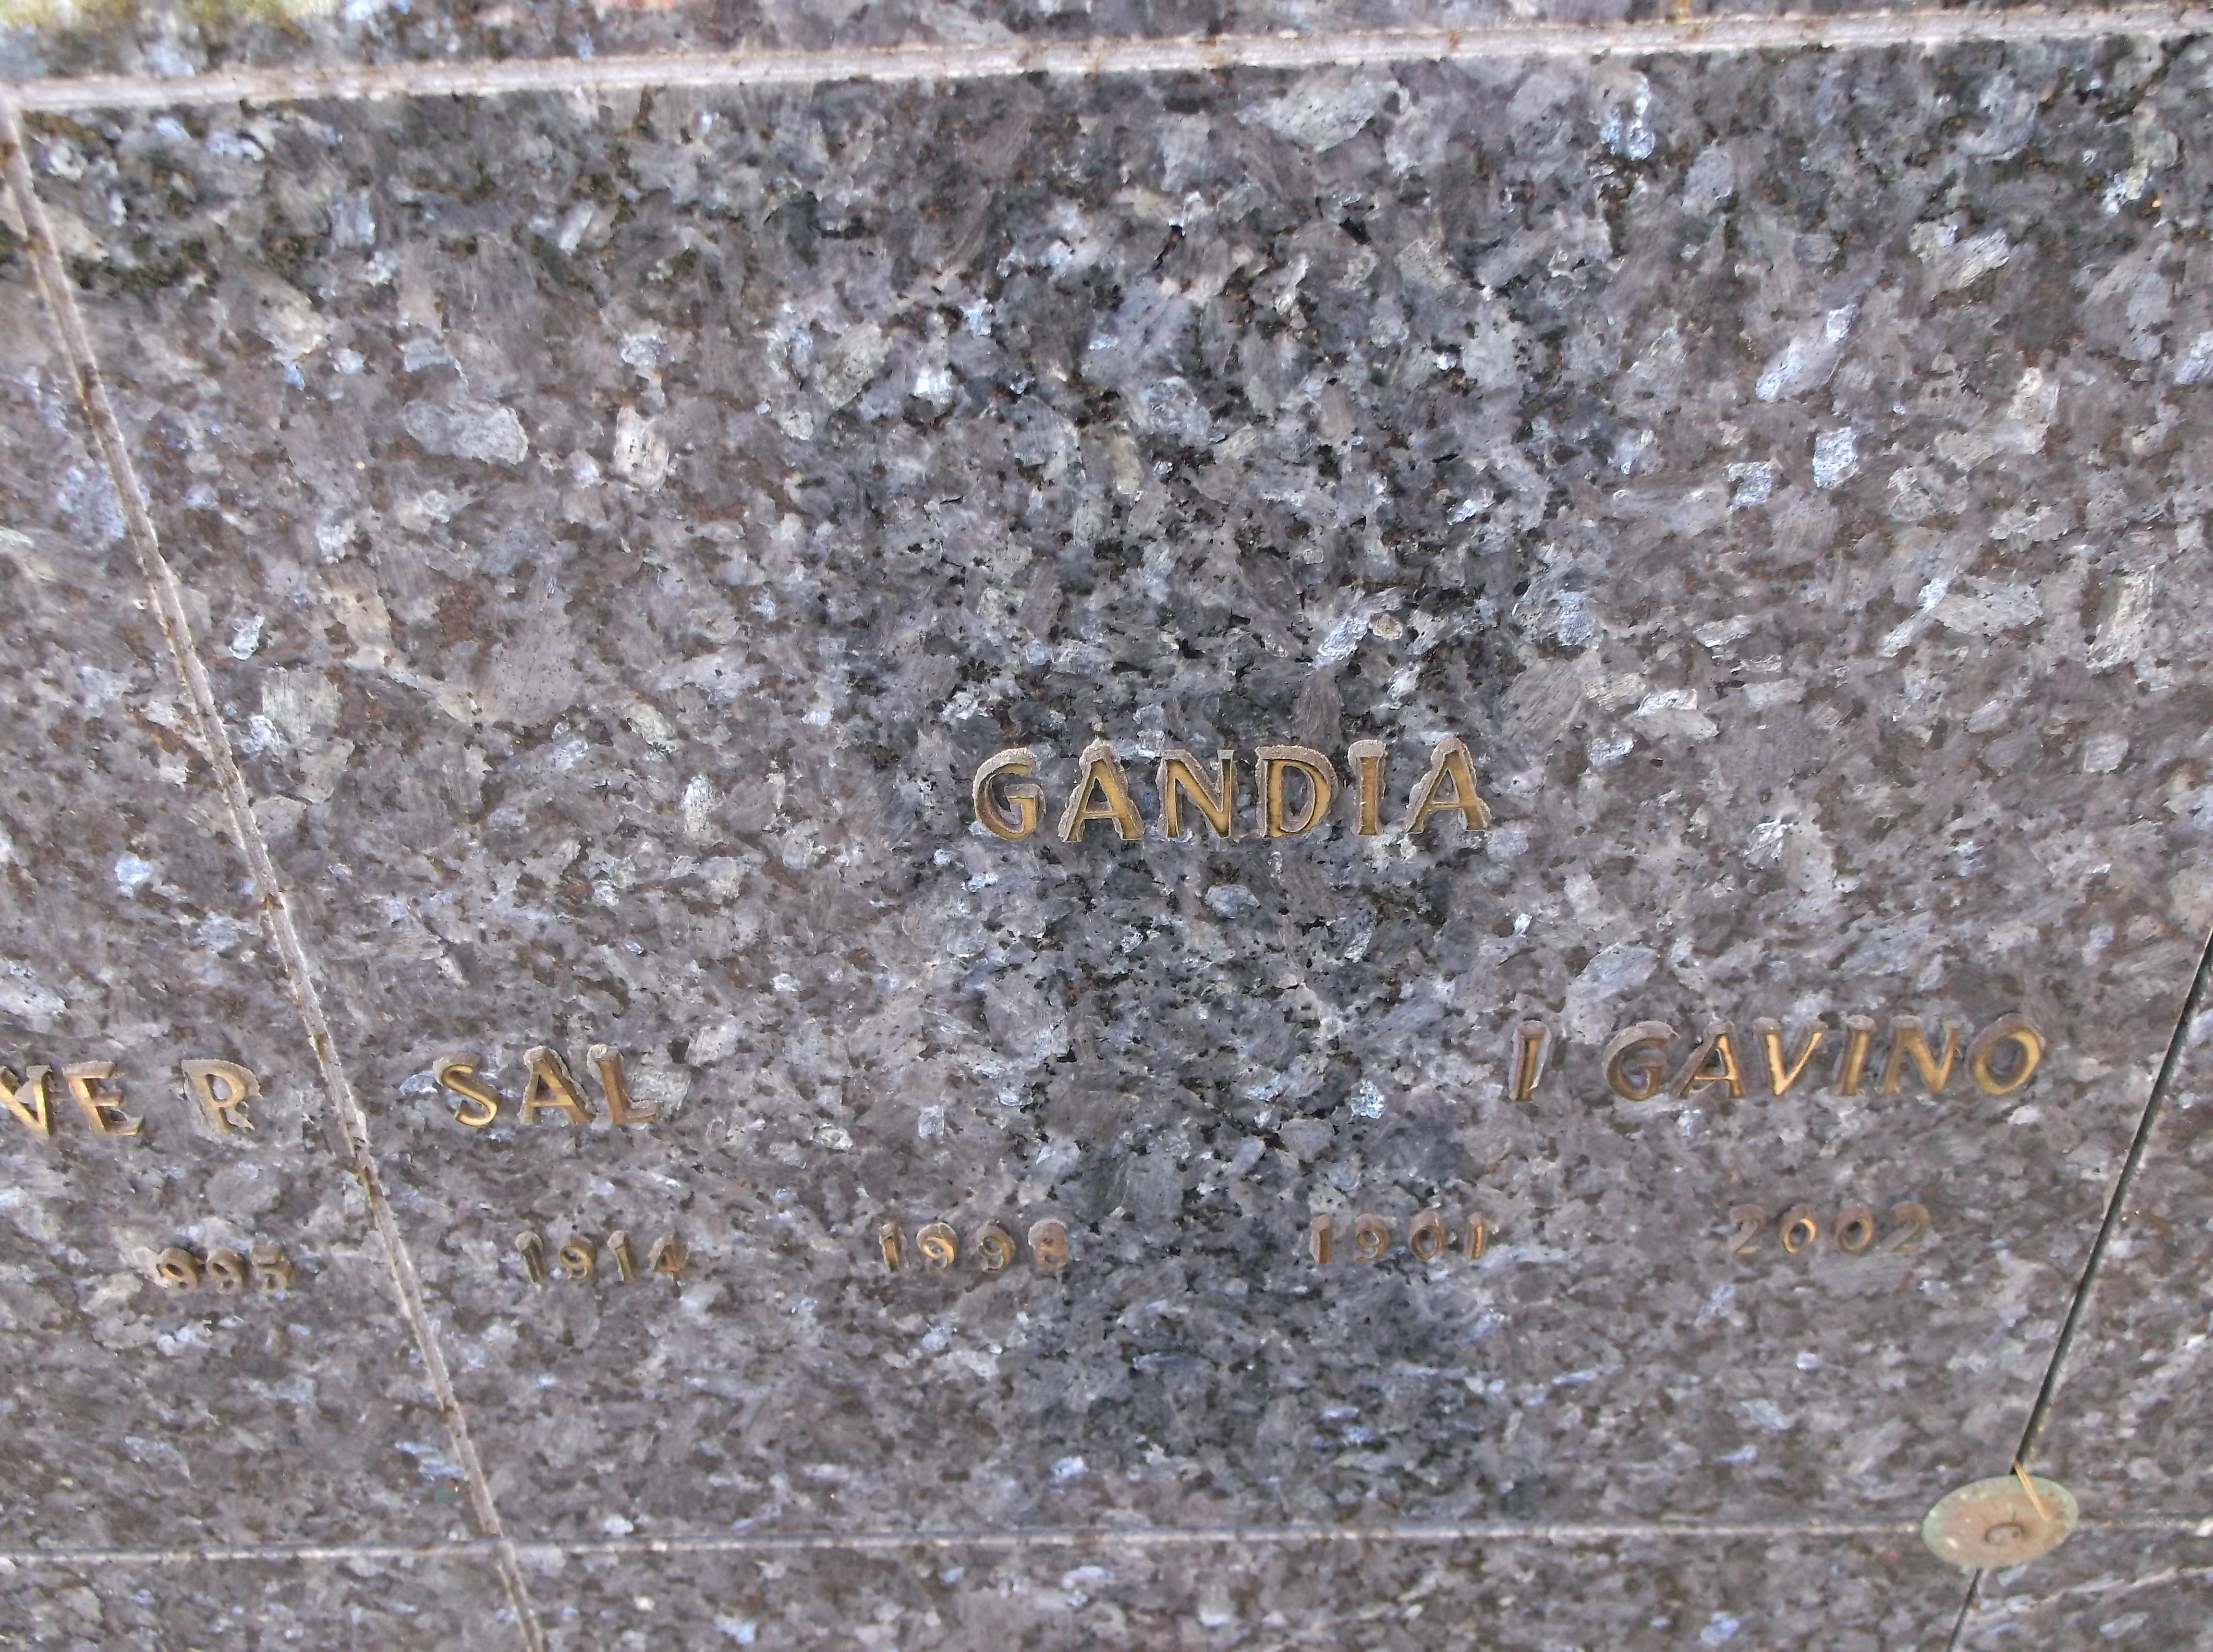 I Gavino Gandia